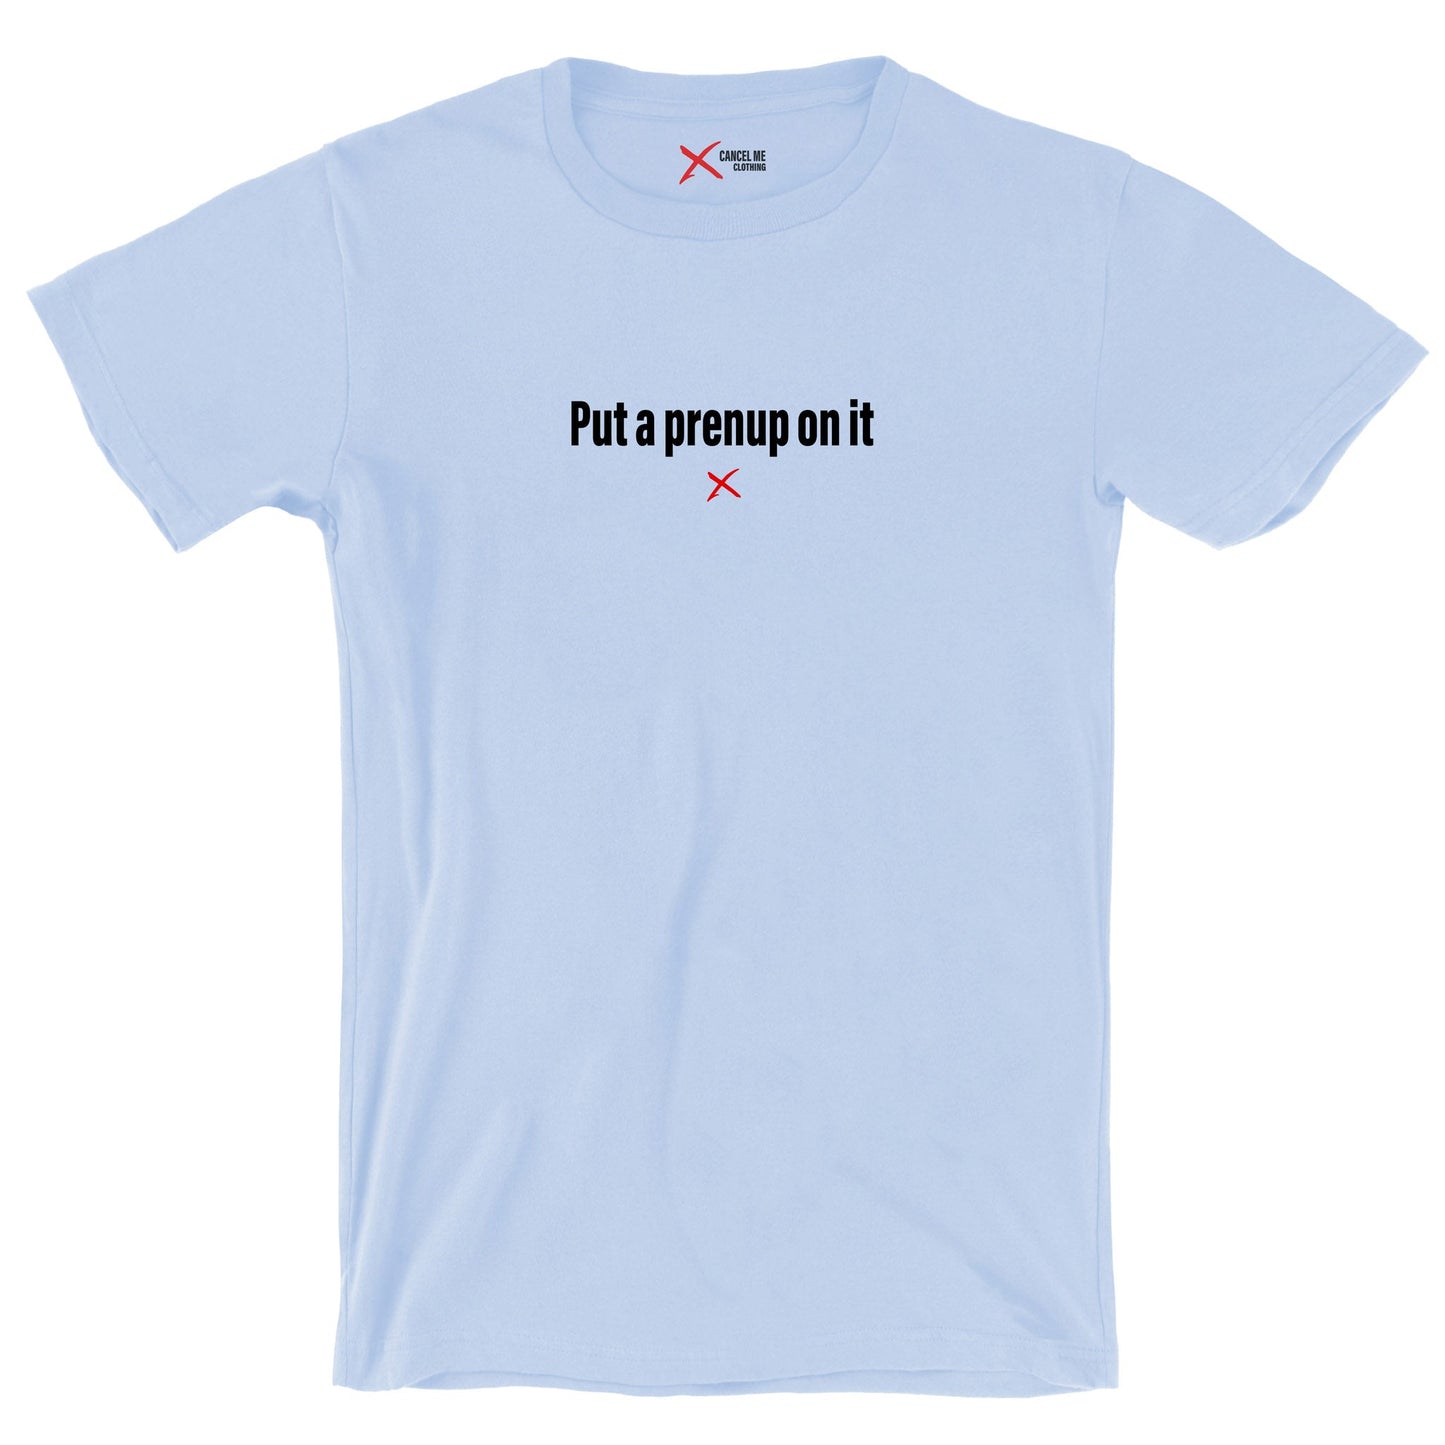 Put a prenup on it - Shirt